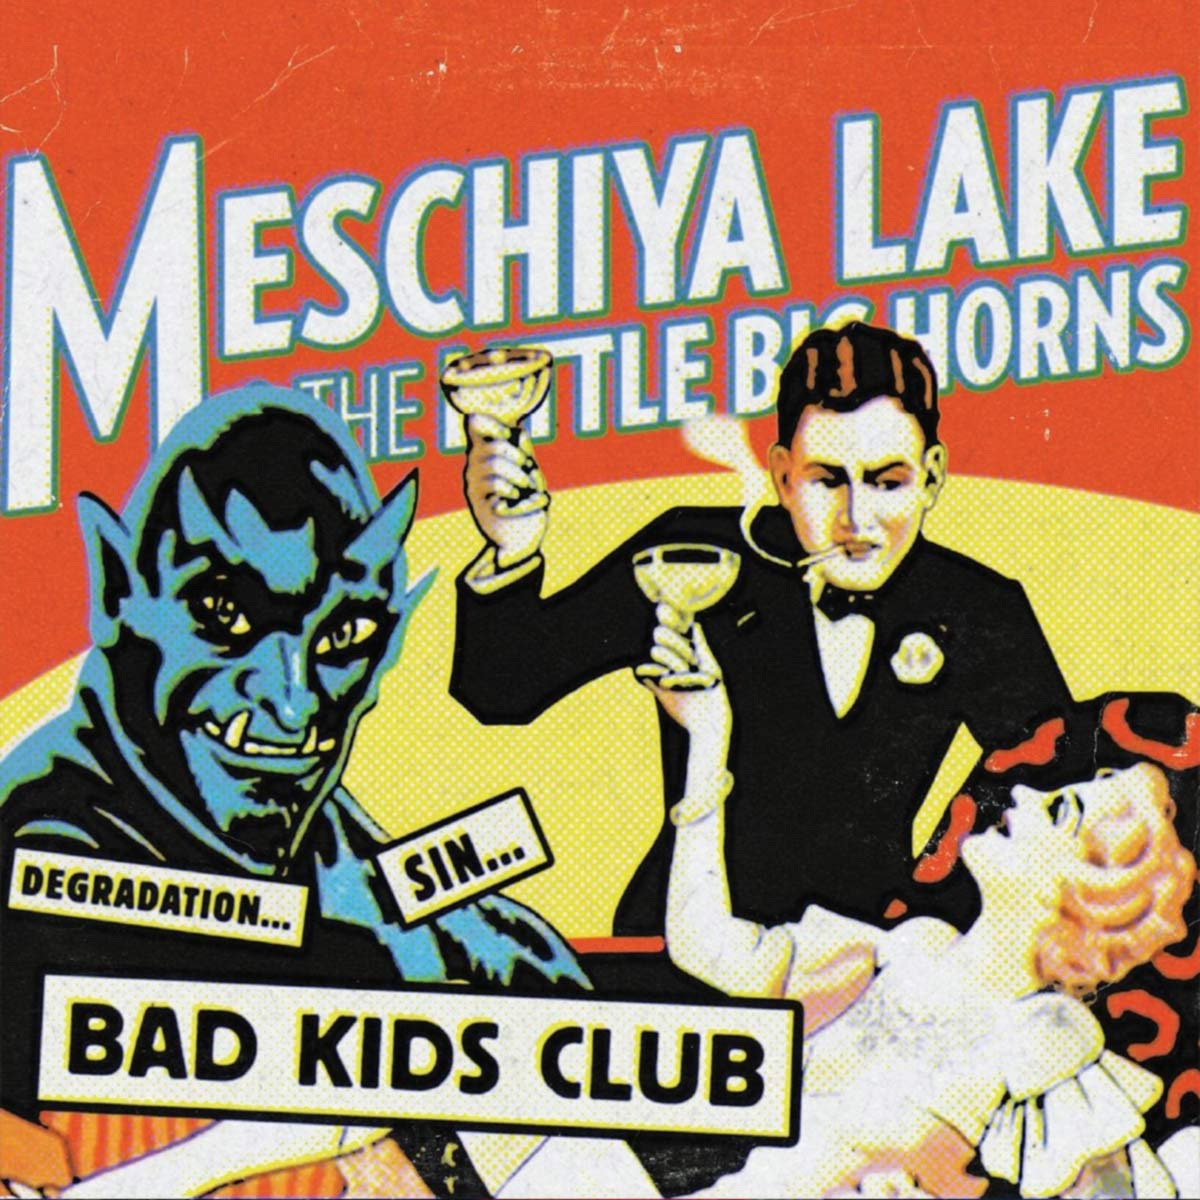 Bad Kids Club